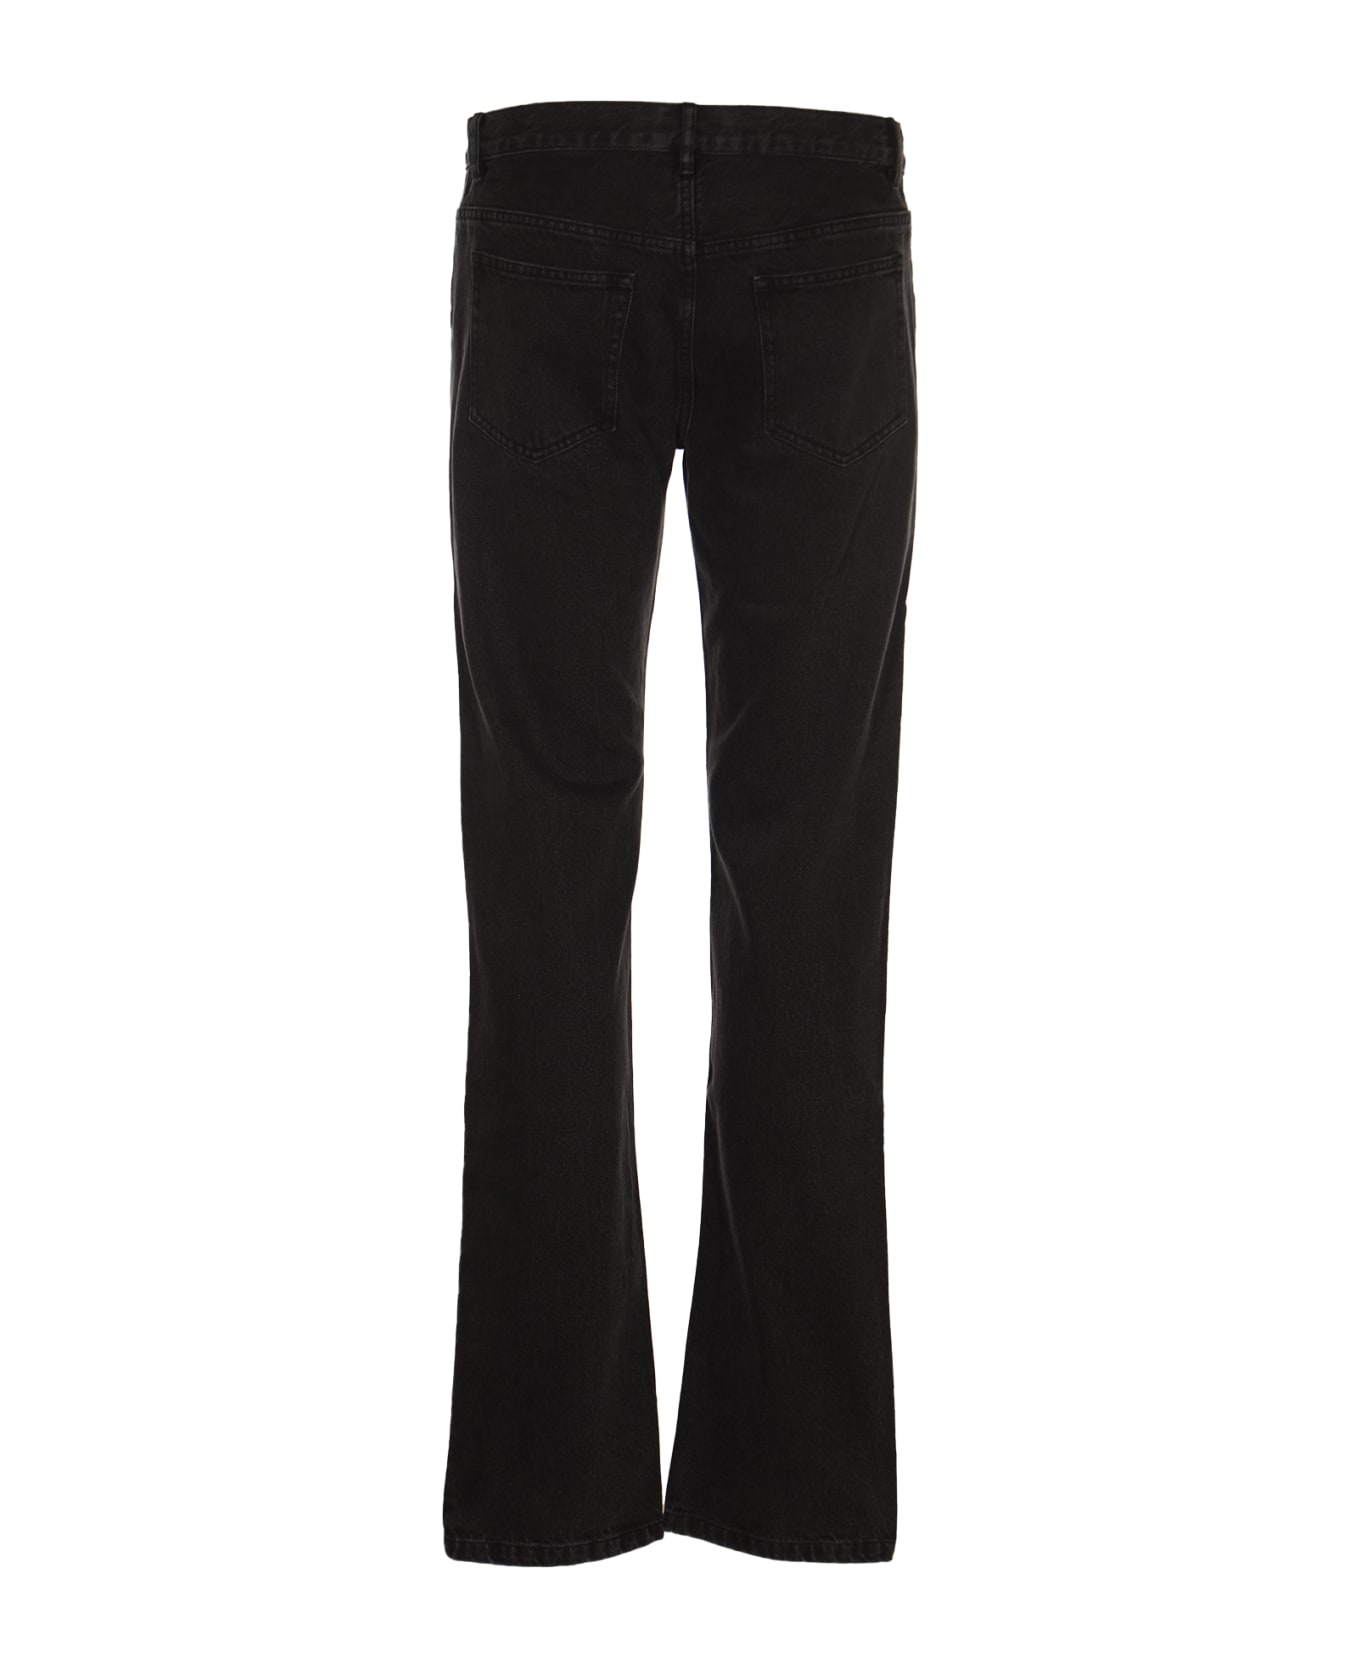 A.P.C. New Standard Jeans - Black デニム